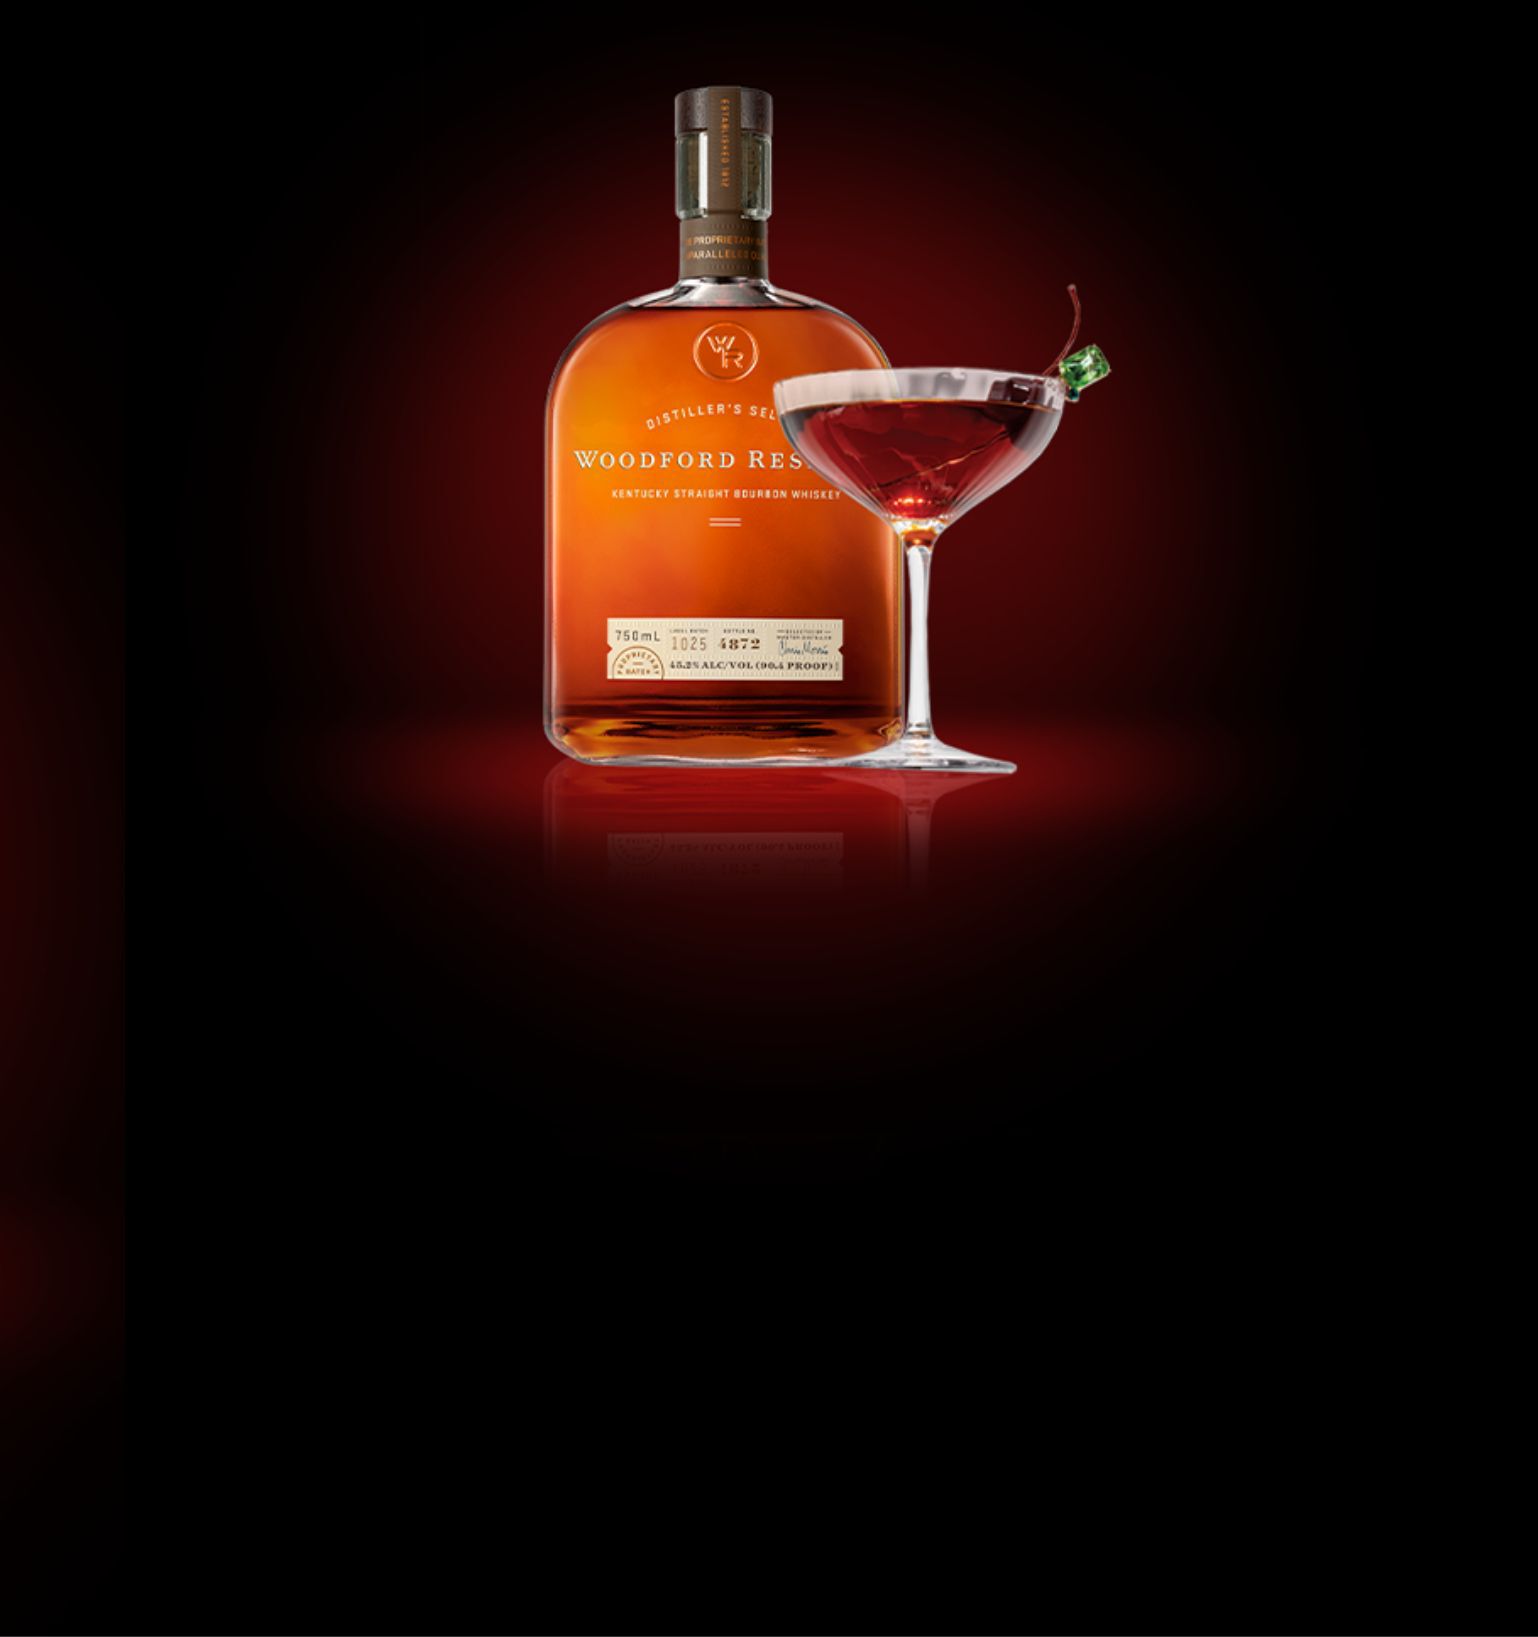 The Bourbon Manhattan Cocktail